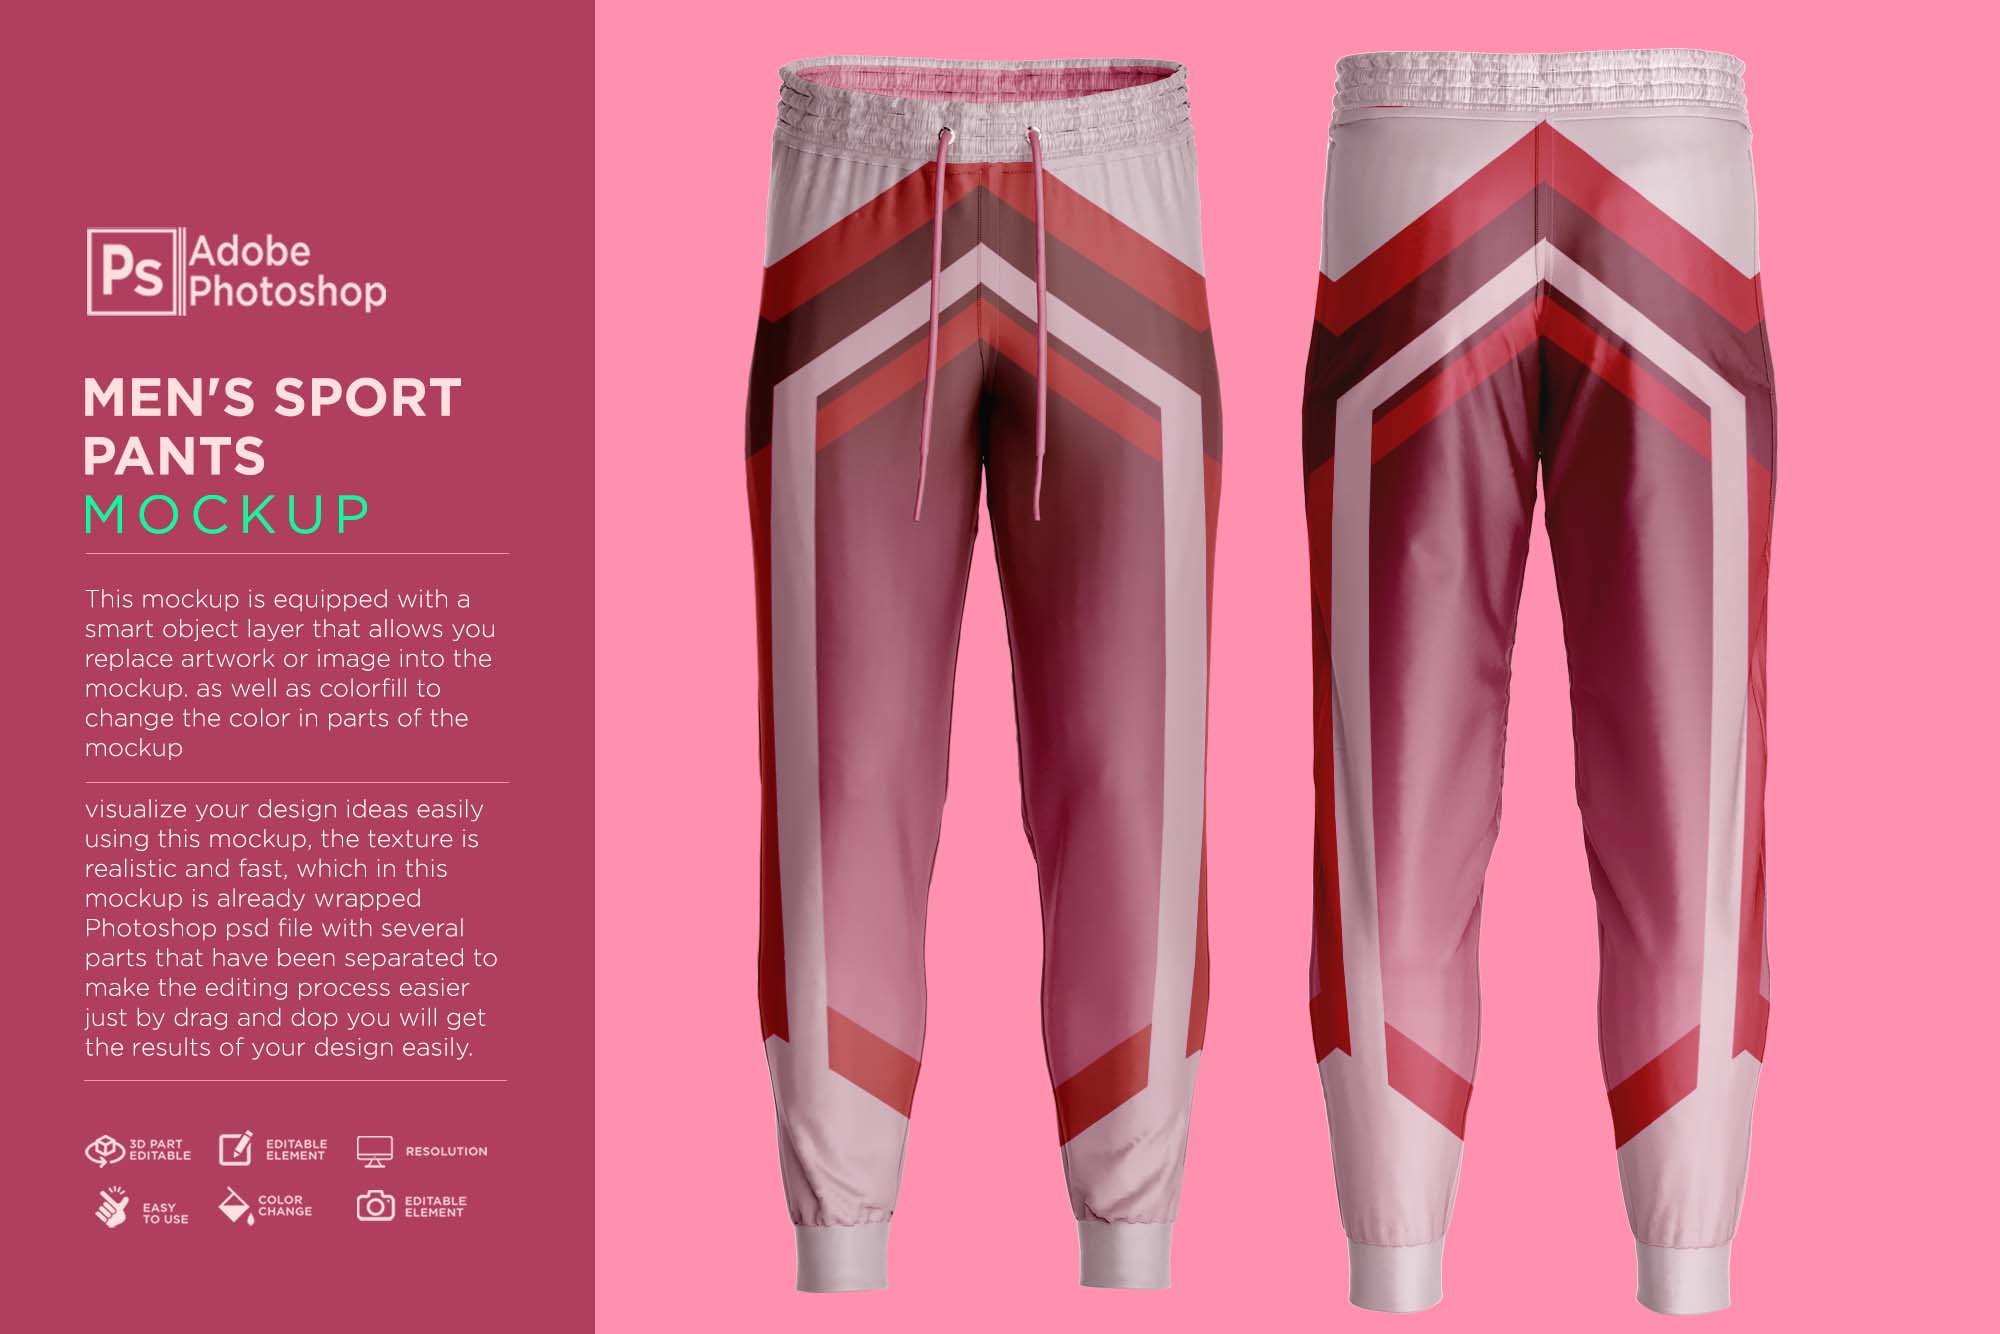 Men's Sport Pants Mockup cover image.